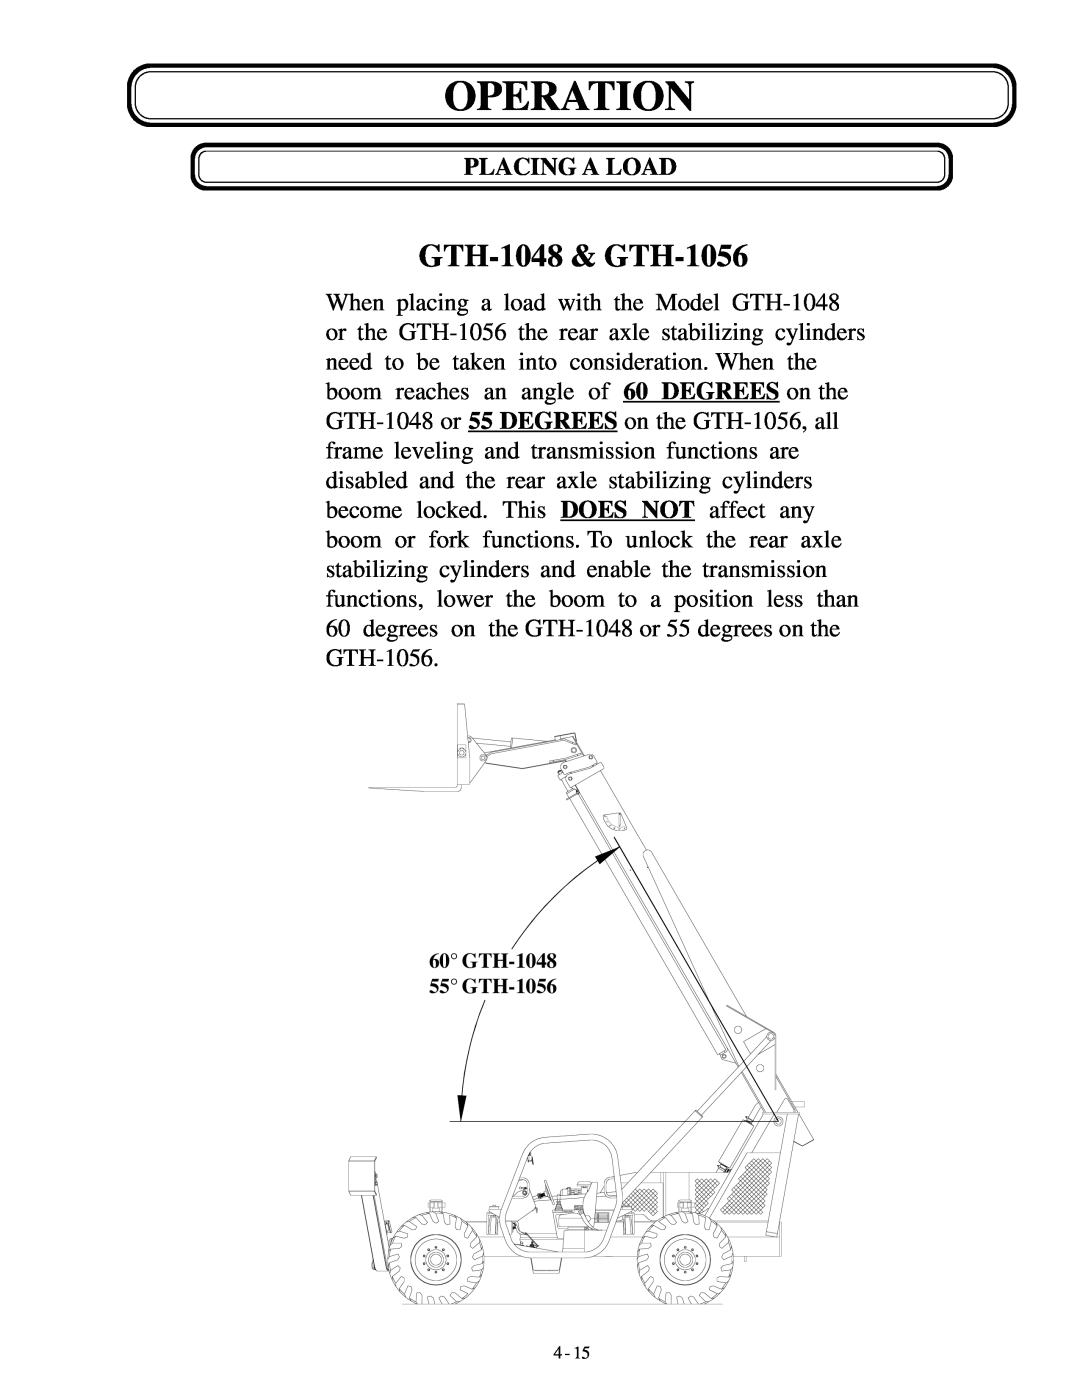 Genie manual GTH-1048 & GTH-1056, Operation, Placing A Load 